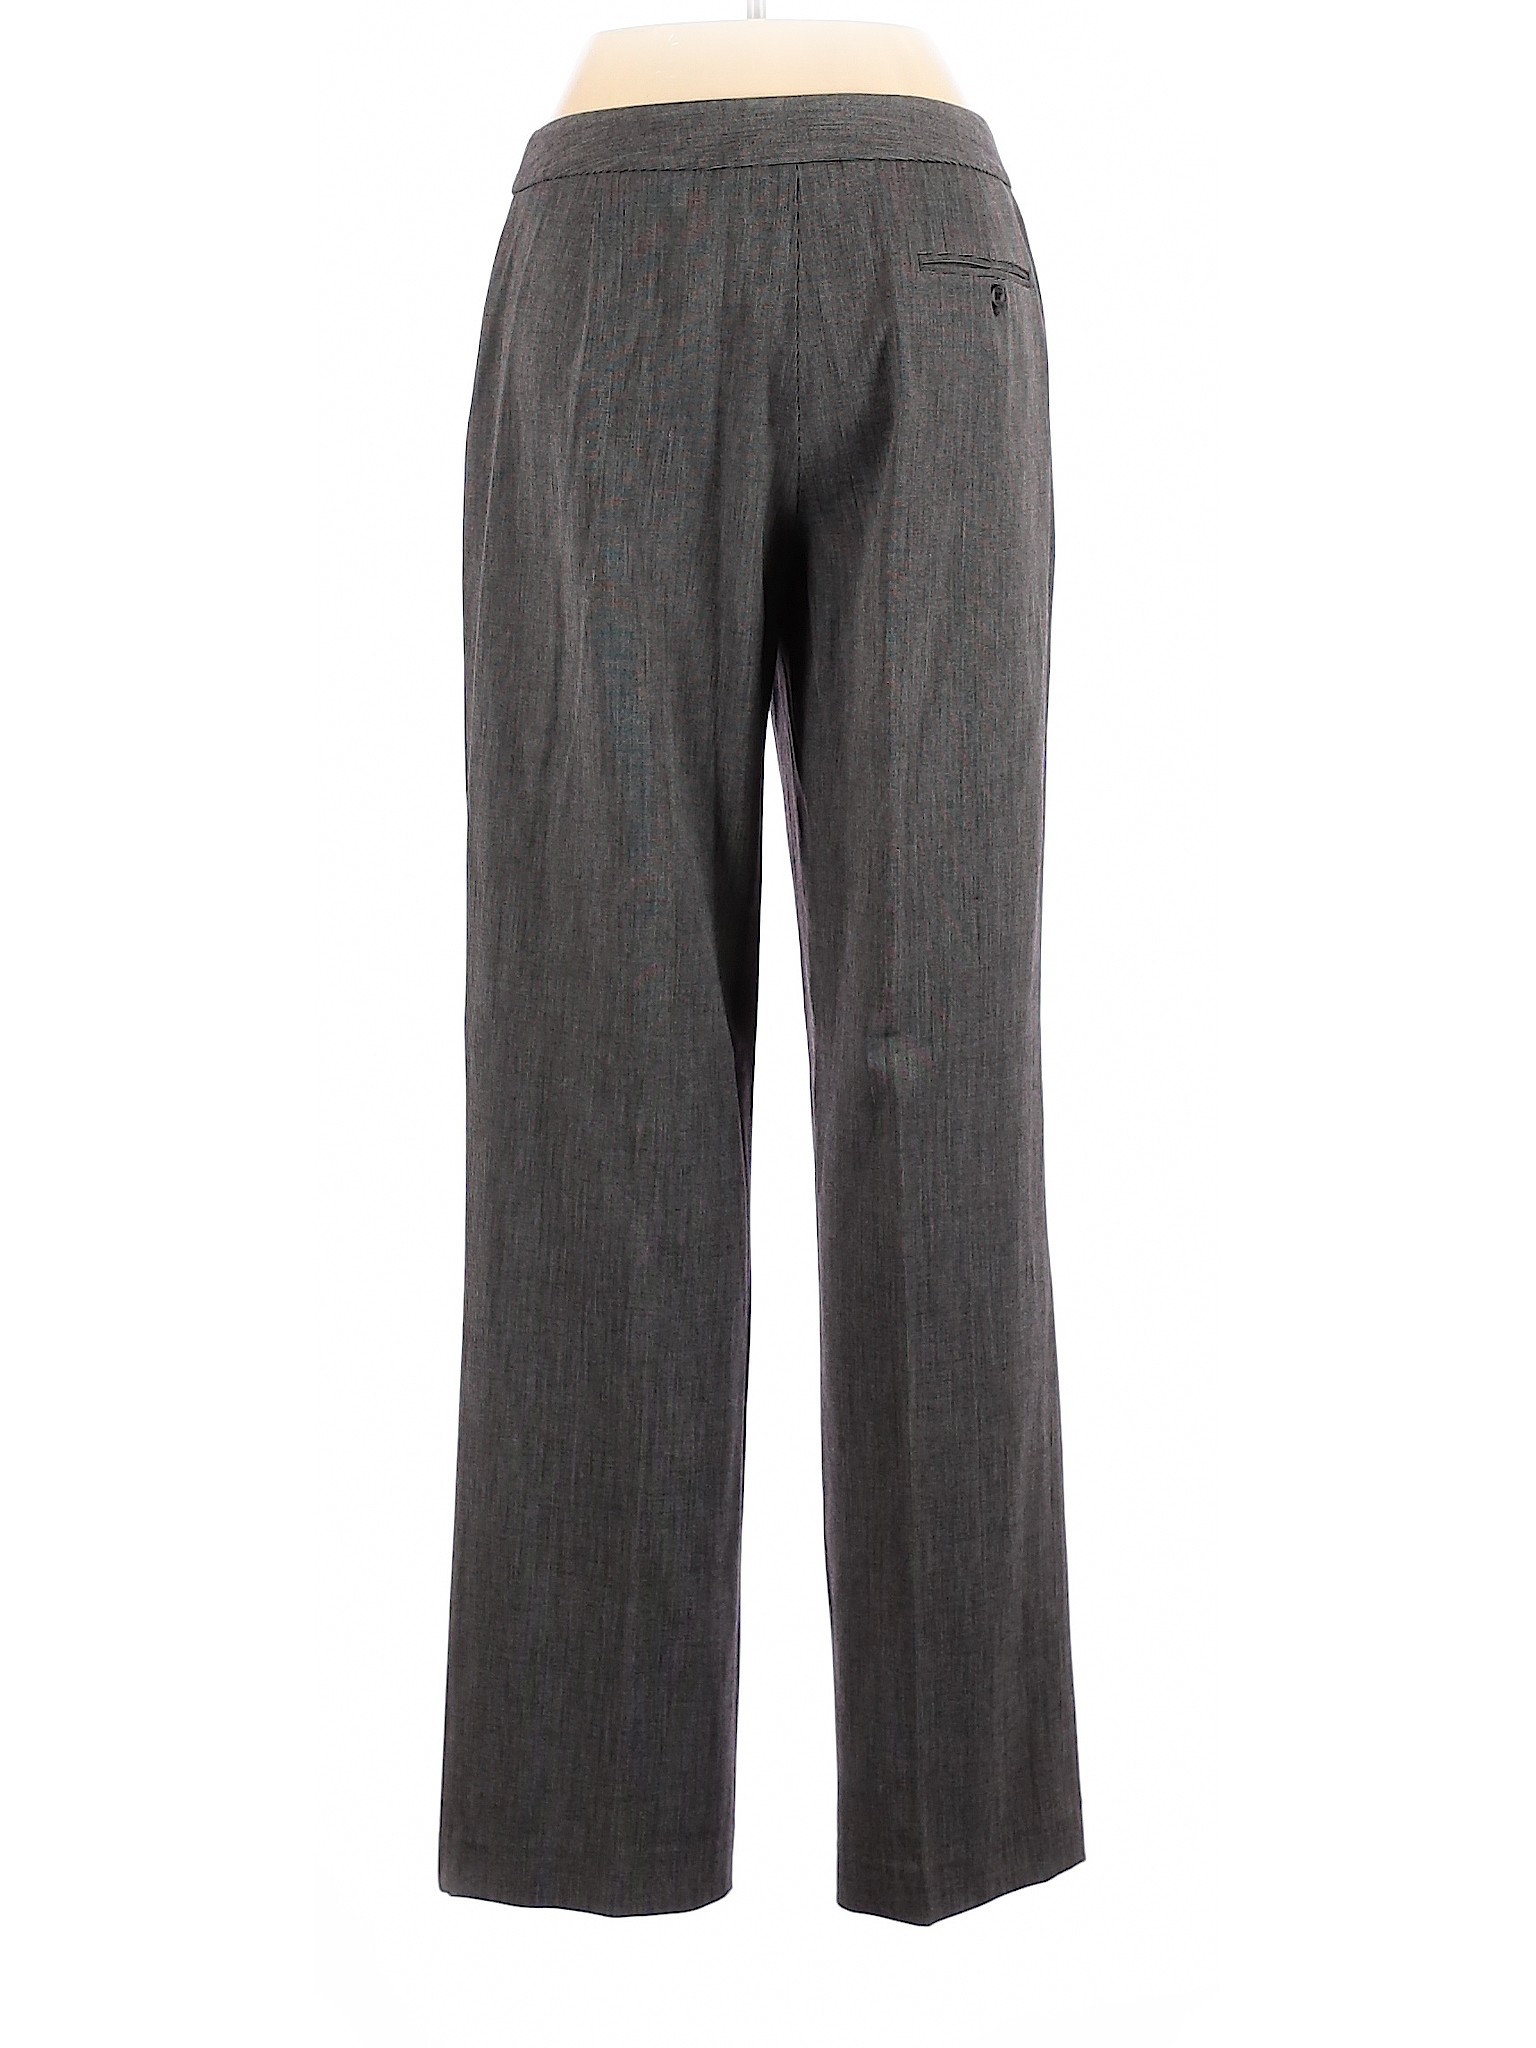 Rafaella Women Gray Dress Pants 10 | eBay